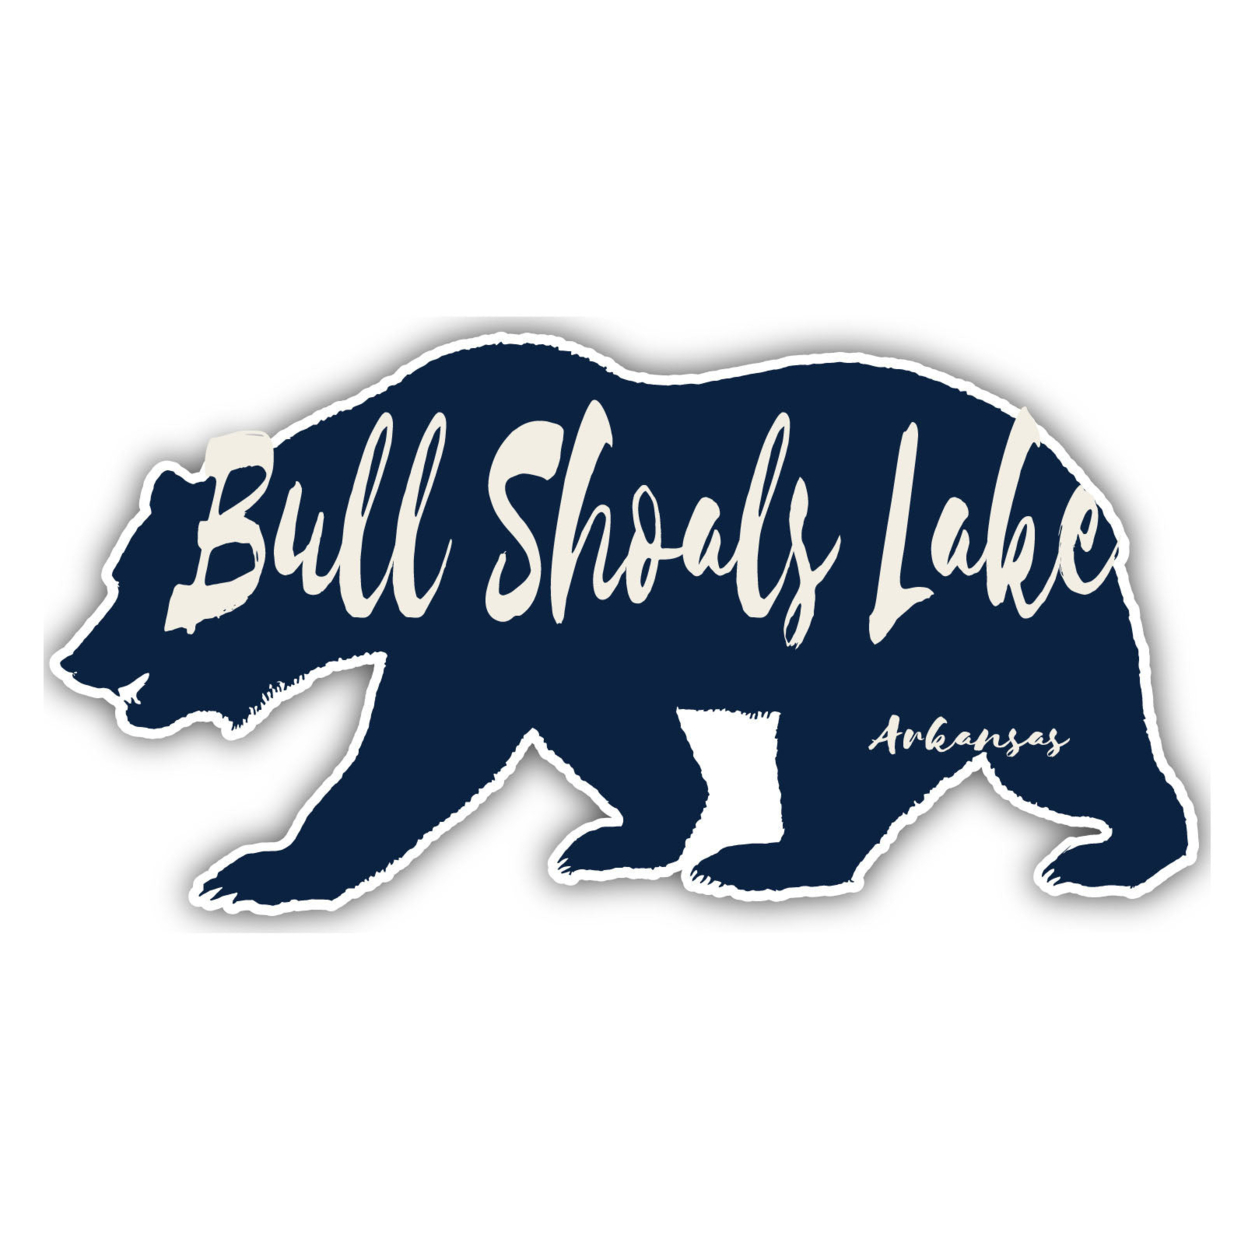 Bull Shoals Lake Arkansas Souvenir Decorative Stickers (Choose Theme And Size) - Single Unit, 6-Inch, Adventures Awaits